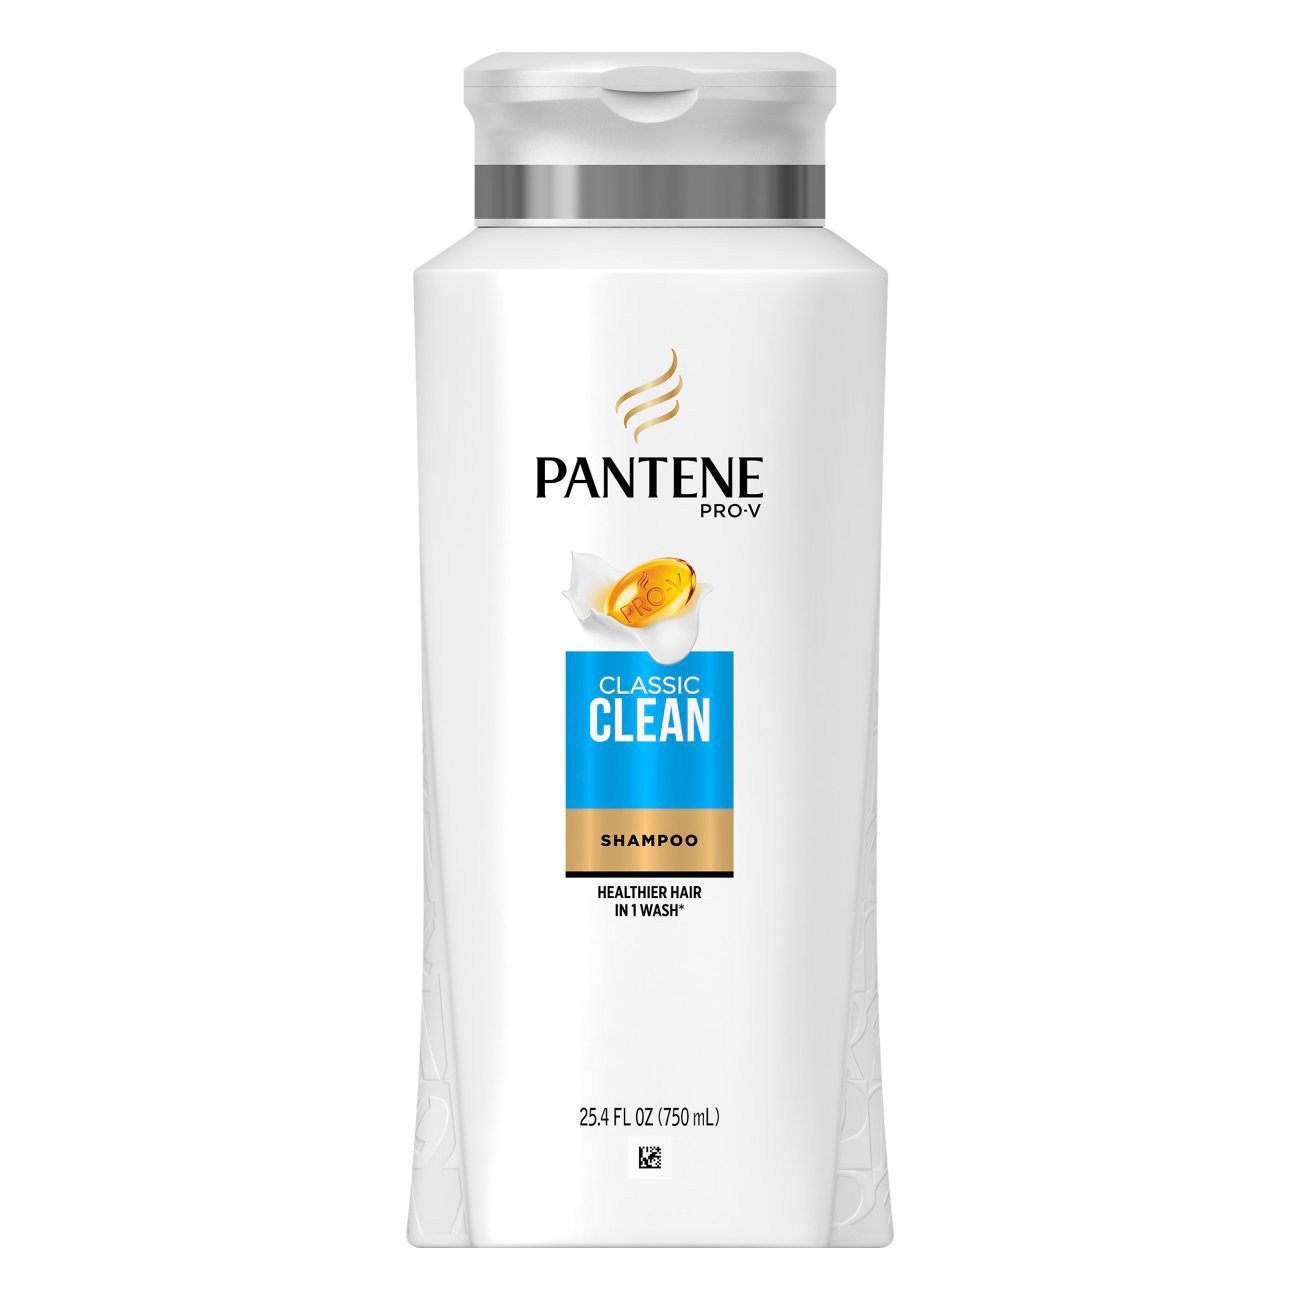 Pantene Pro-V Classic Clean Shampoo - Shop Shampoo & Conditioner at H-E-B